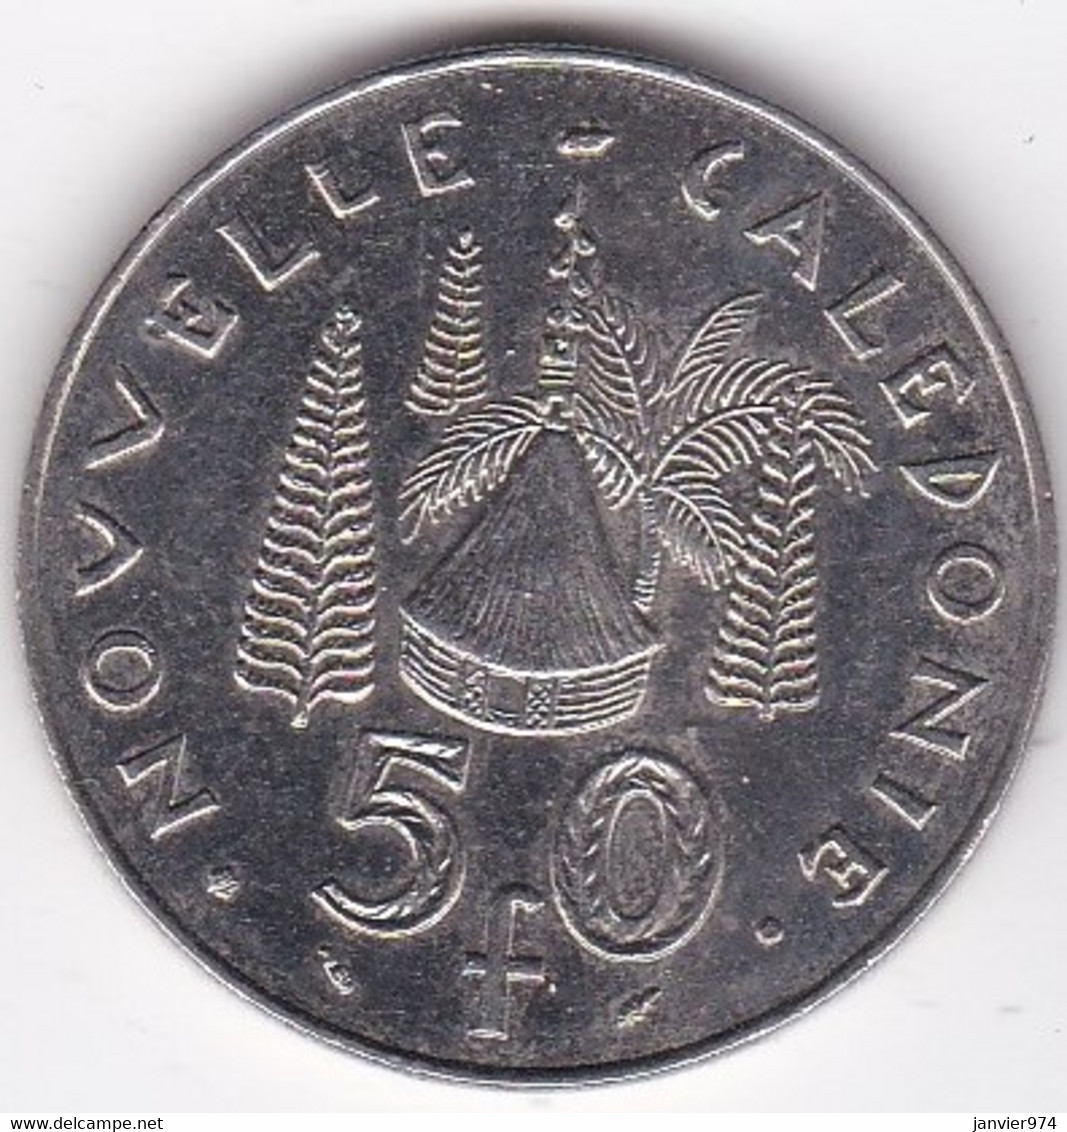 Nouvelle-Calédonie . 50 Francs 1991. En Nickel - Neu-Kaledonien